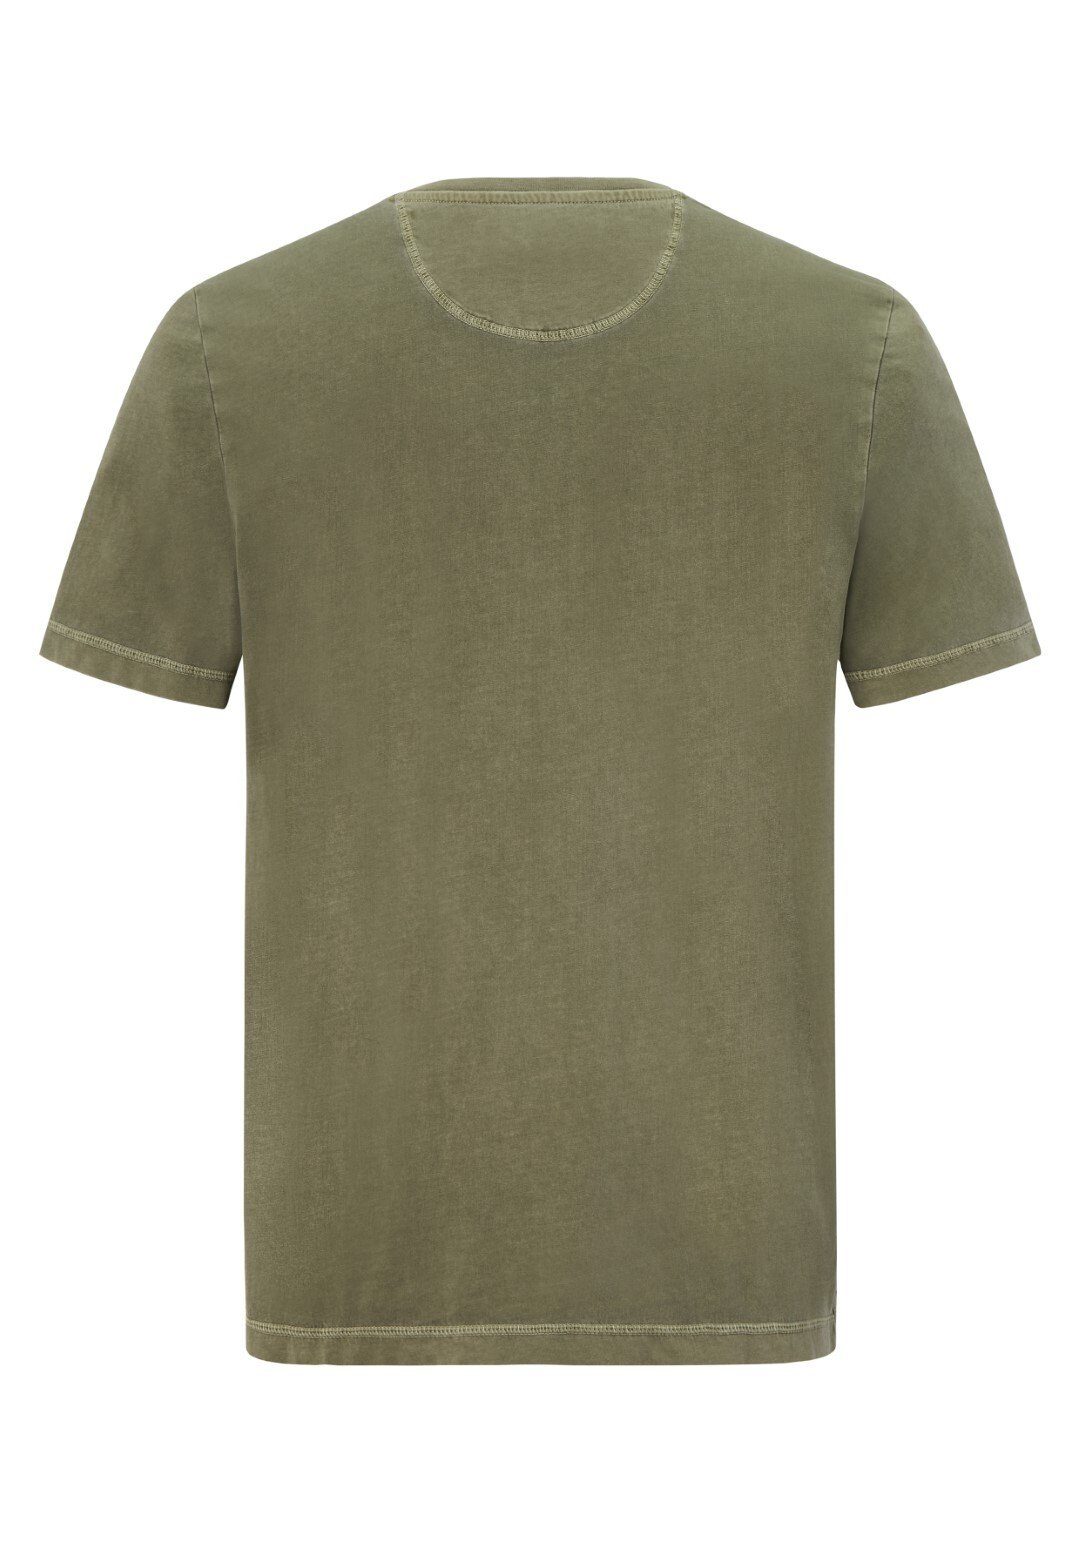 aus Kurzarmshirt Baumwolle dusty Paddock's Shirt Henley olive